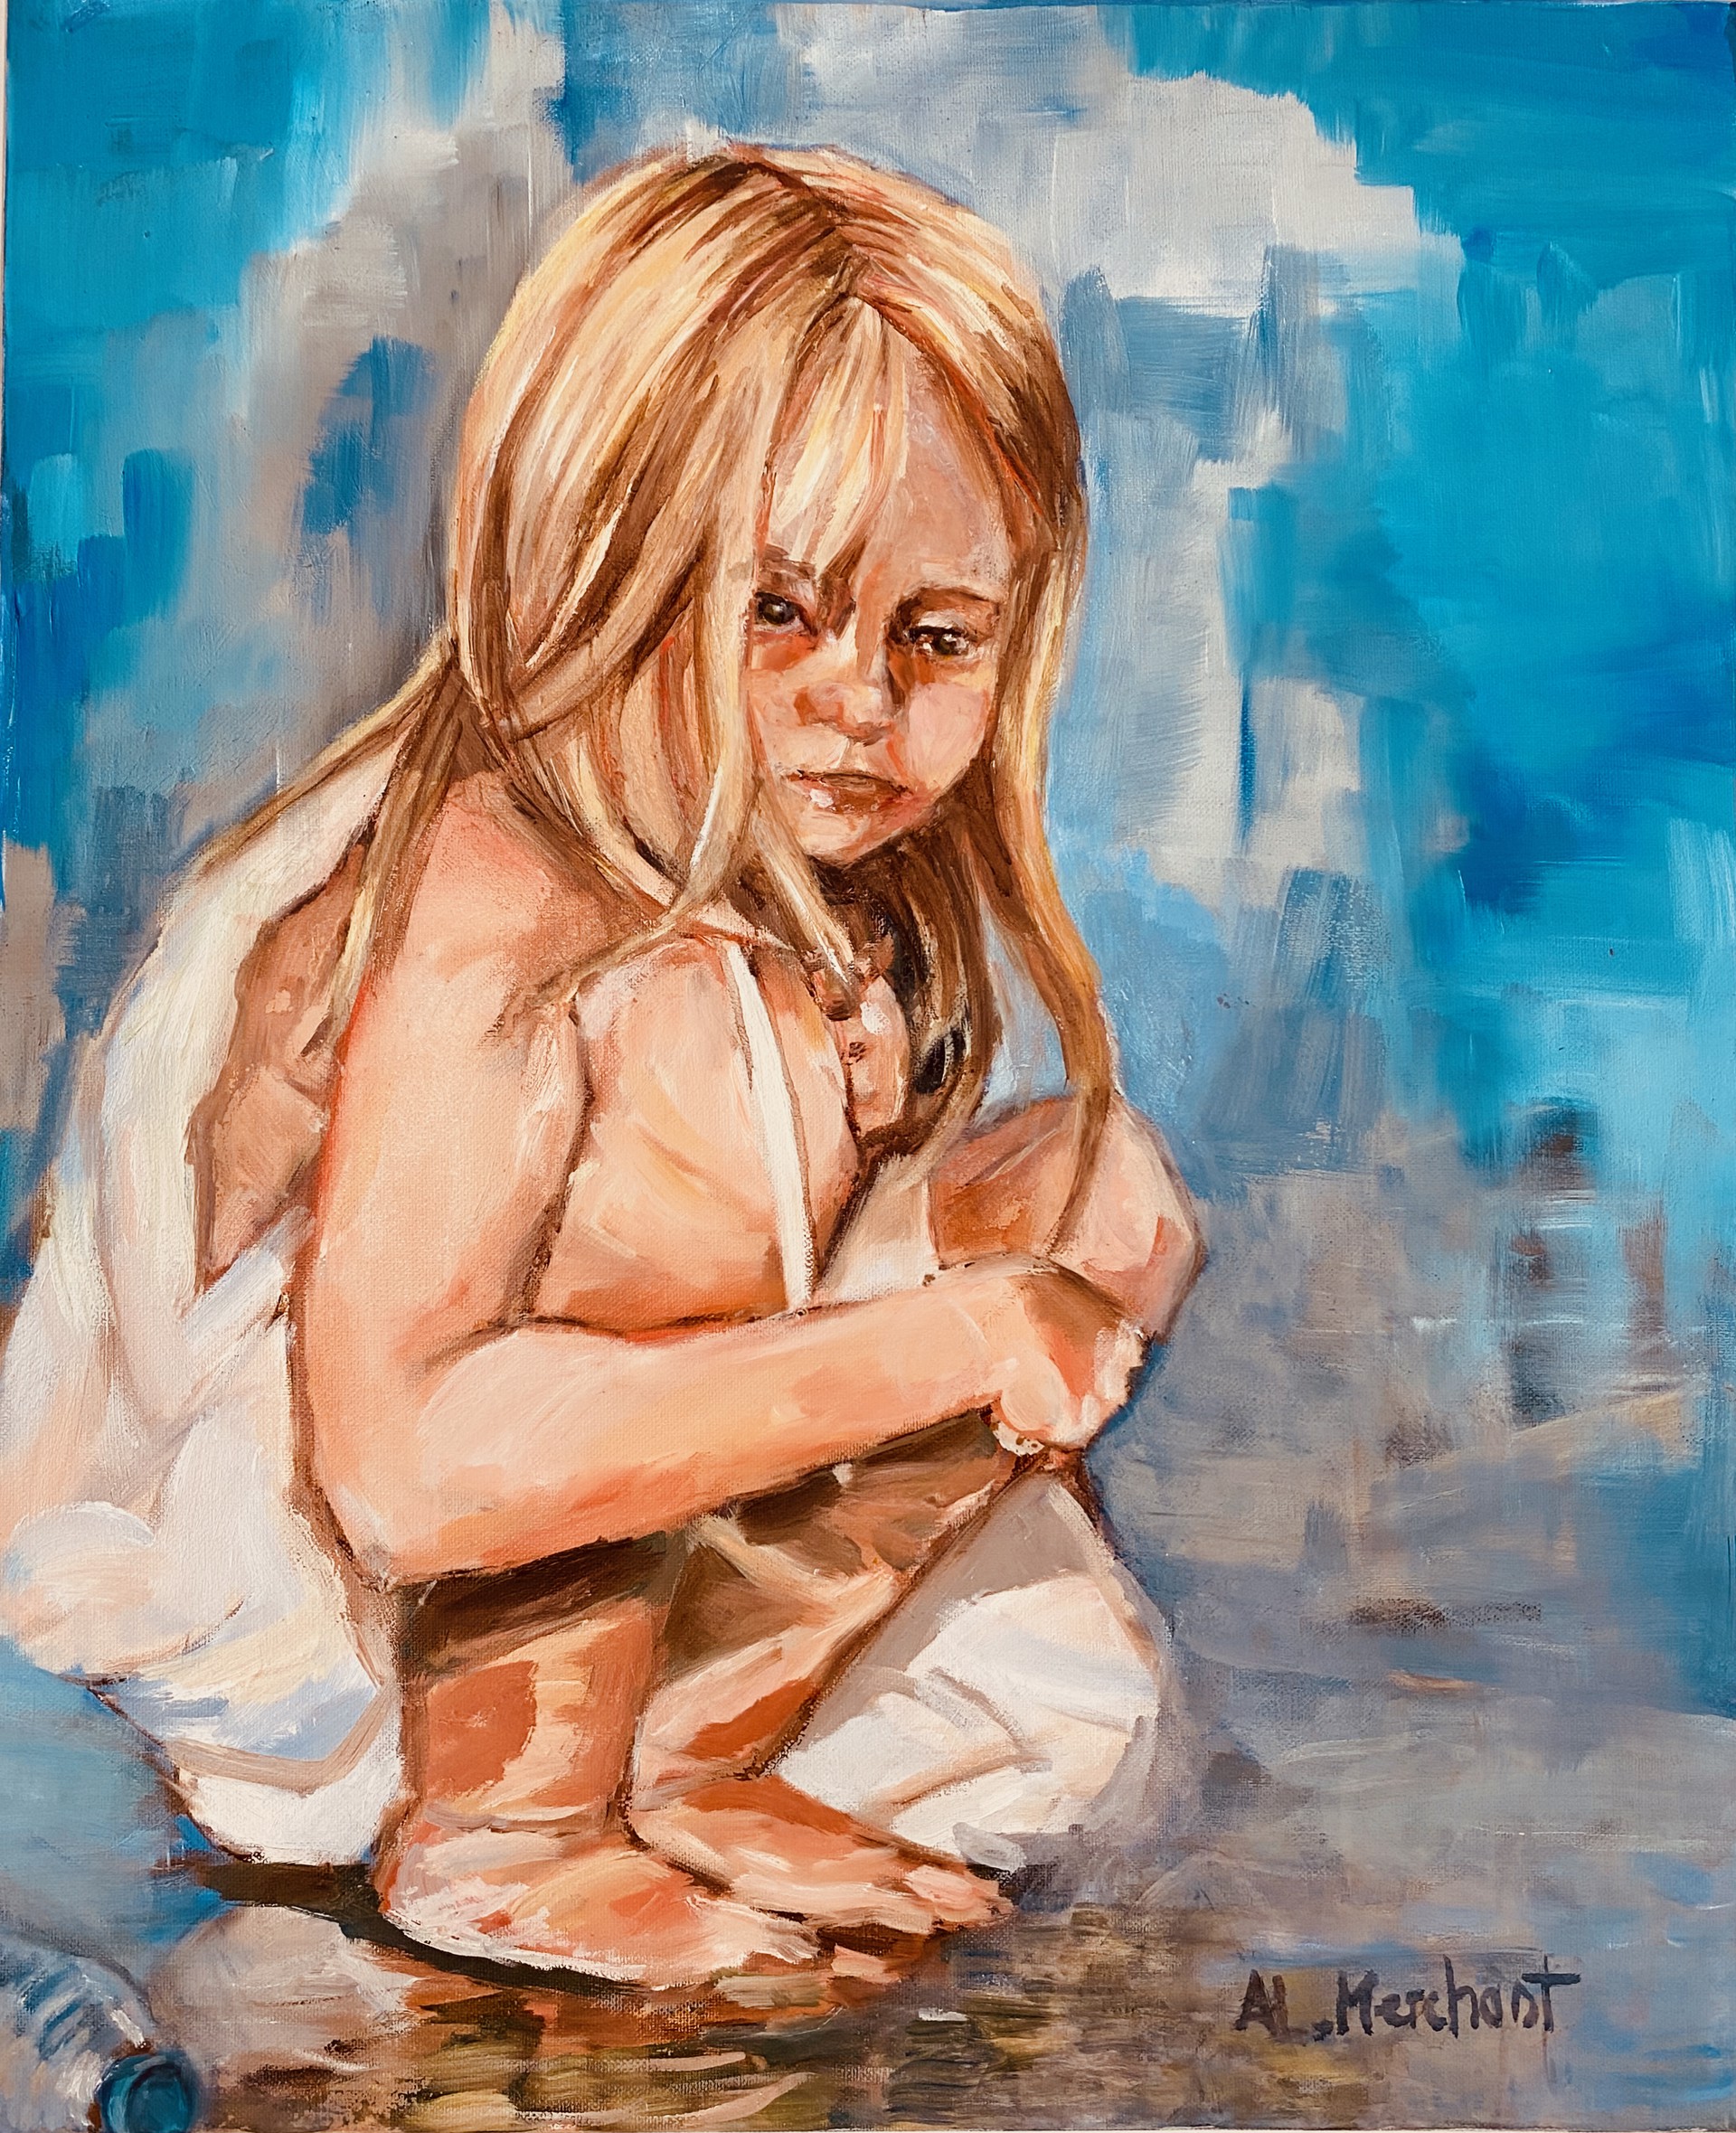 A Girl's Plead by Anne-Lise Merchant